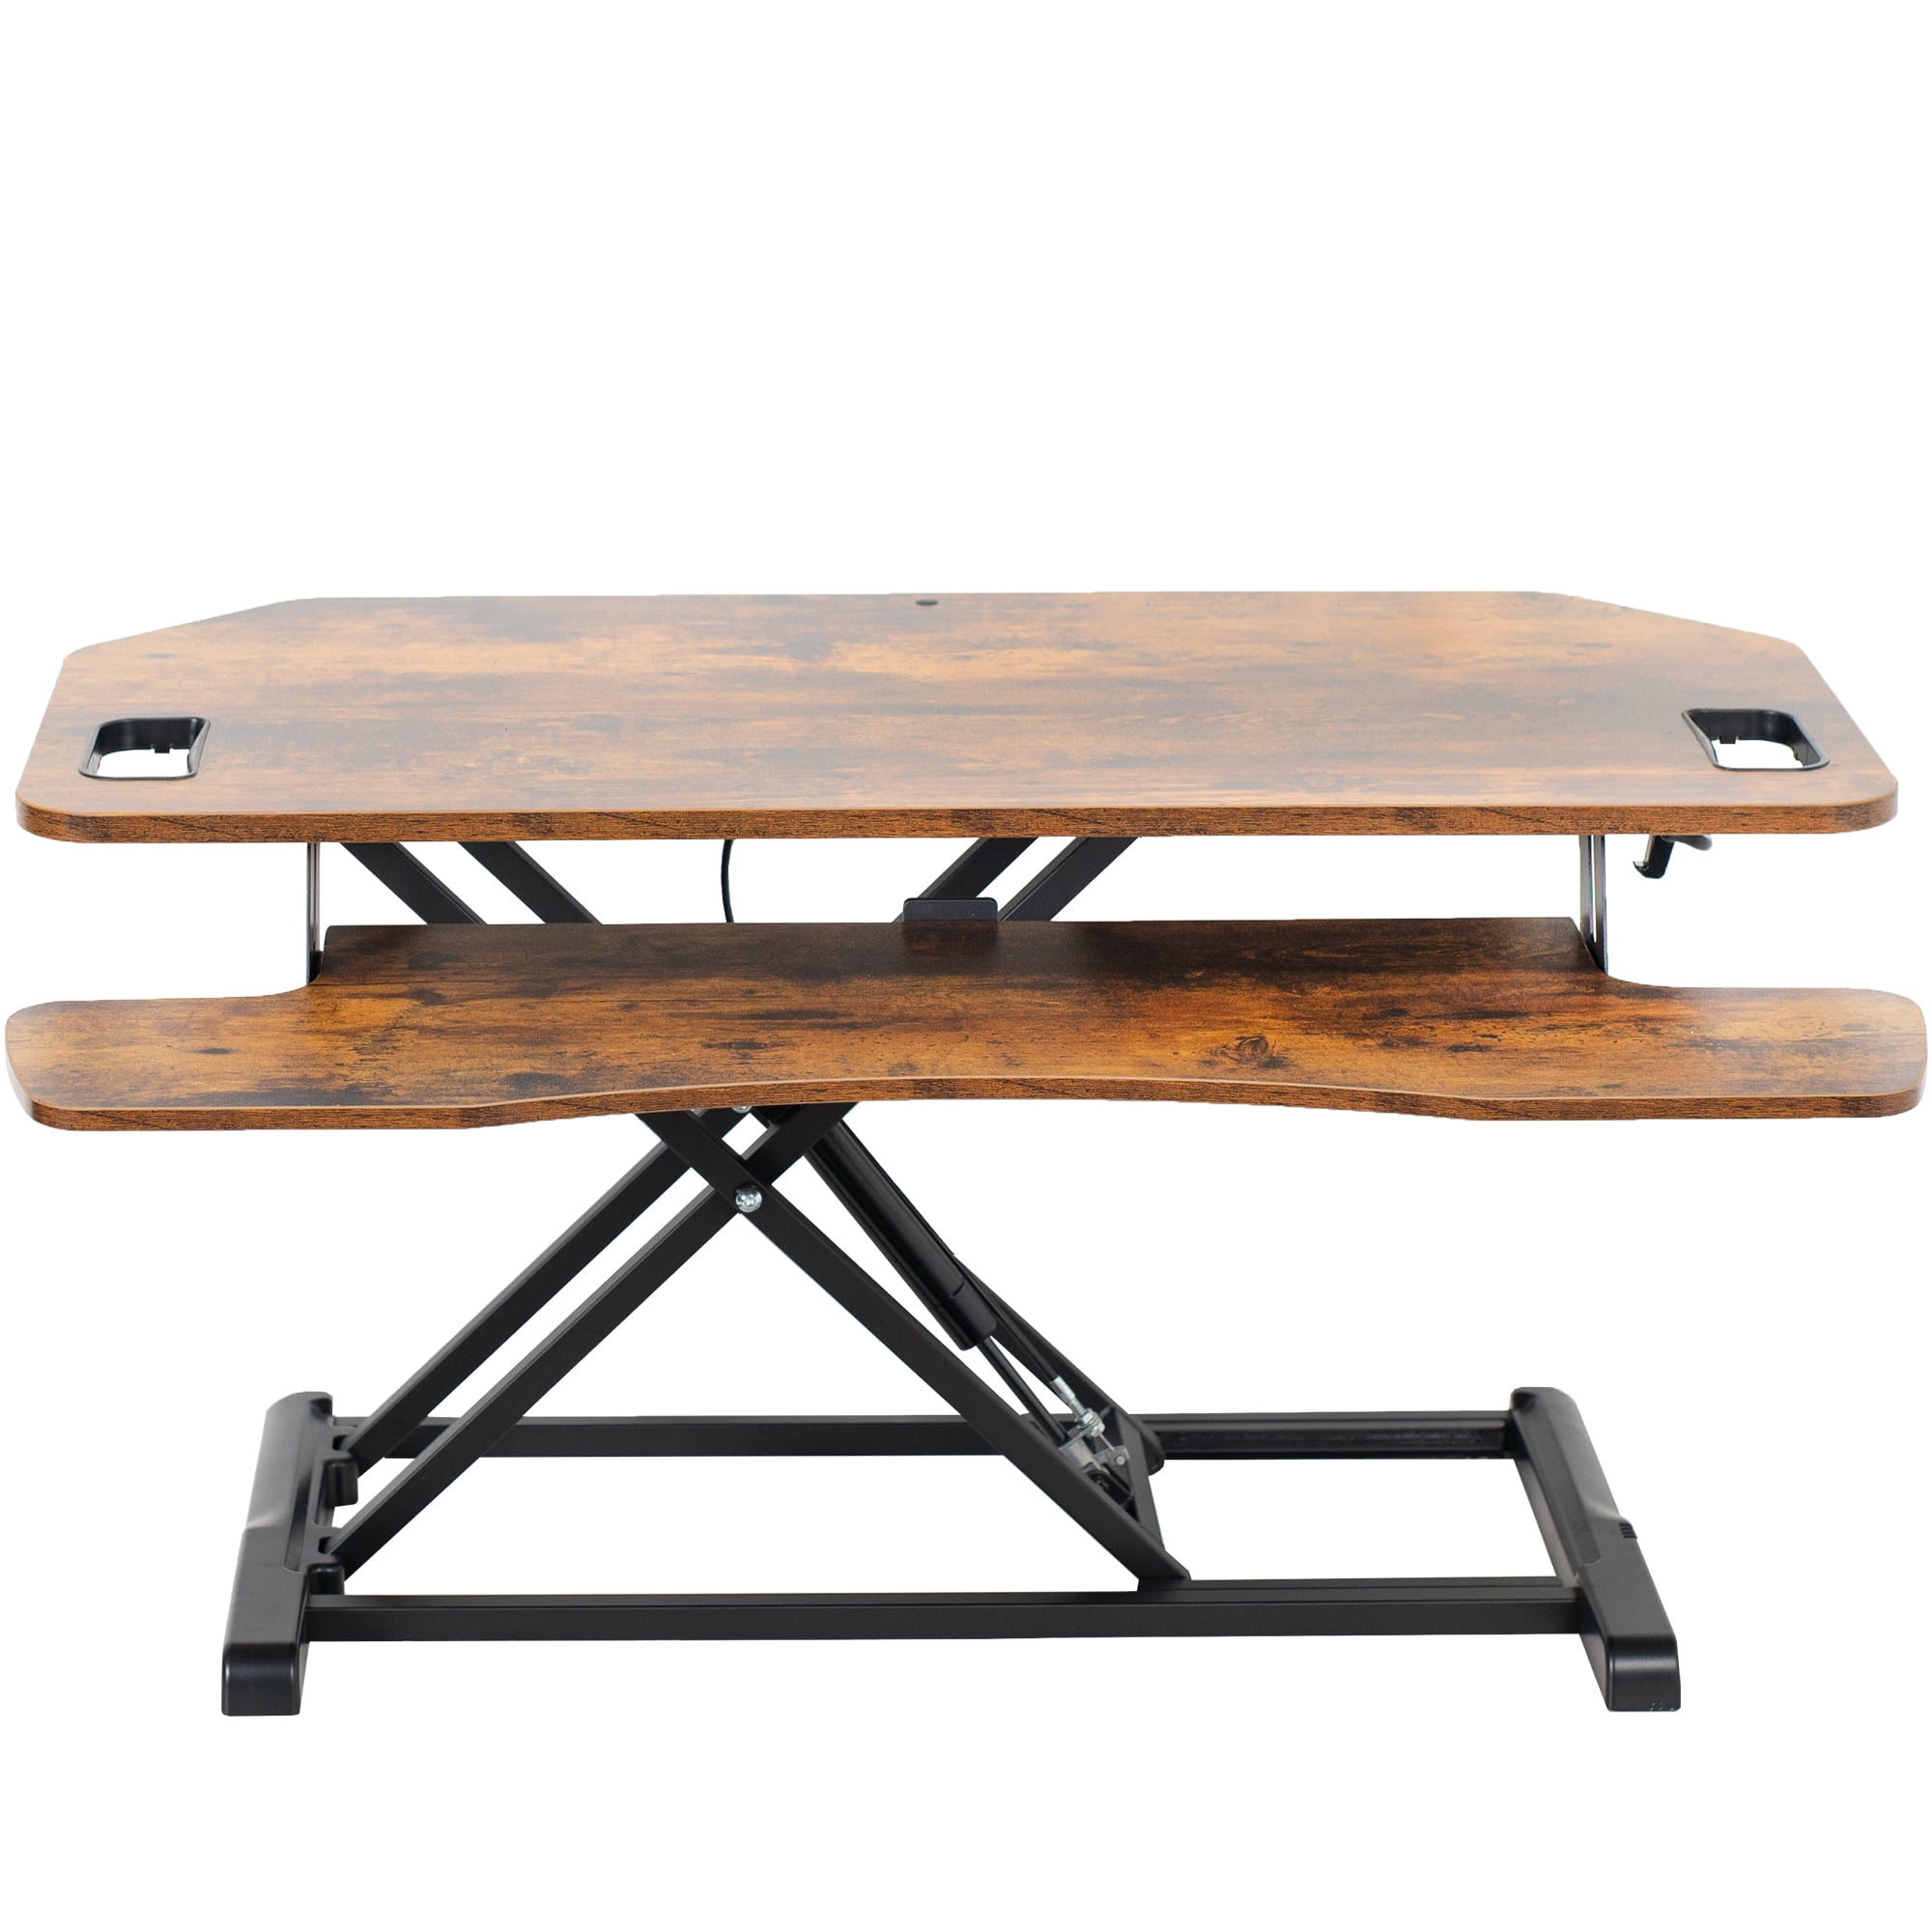 Standing Desk - DeskRiser 37X - Height Adjustable